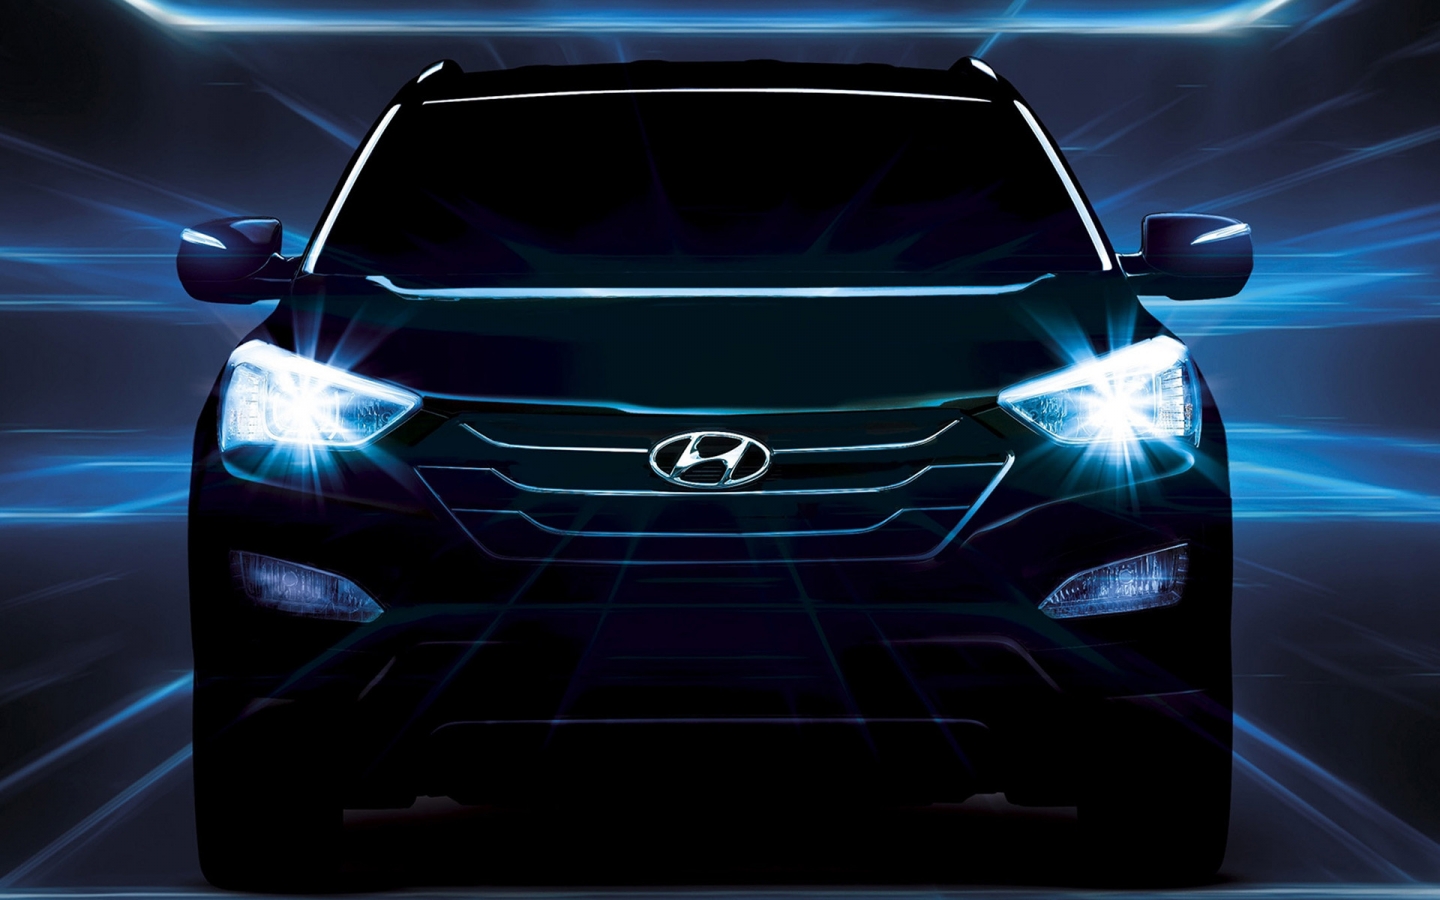 Gorgeous Hyundai Santa Fe 2013 for 1440 x 900 widescreen resolution